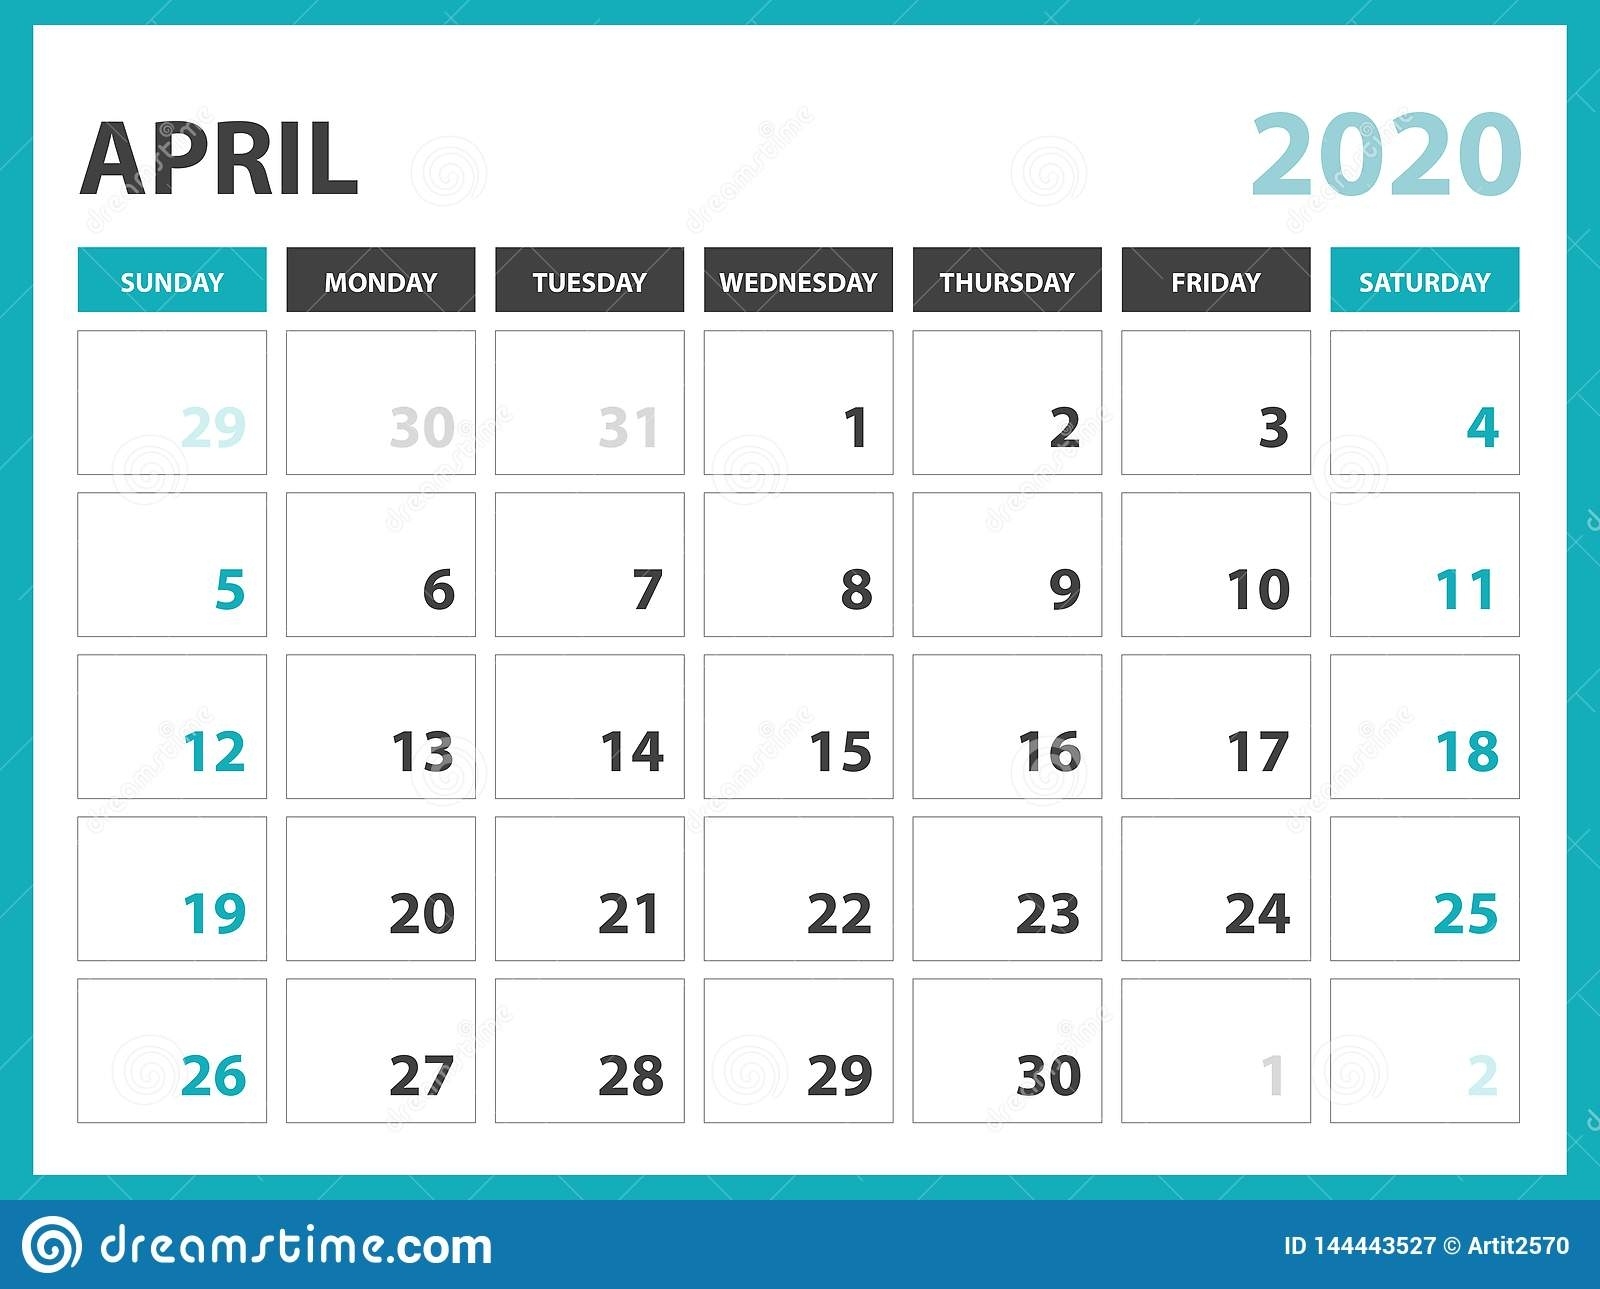 Desk Calendar Layout Size 8 X 6 Inch, April 2020 Calendar 6 X 6 Calendar Template